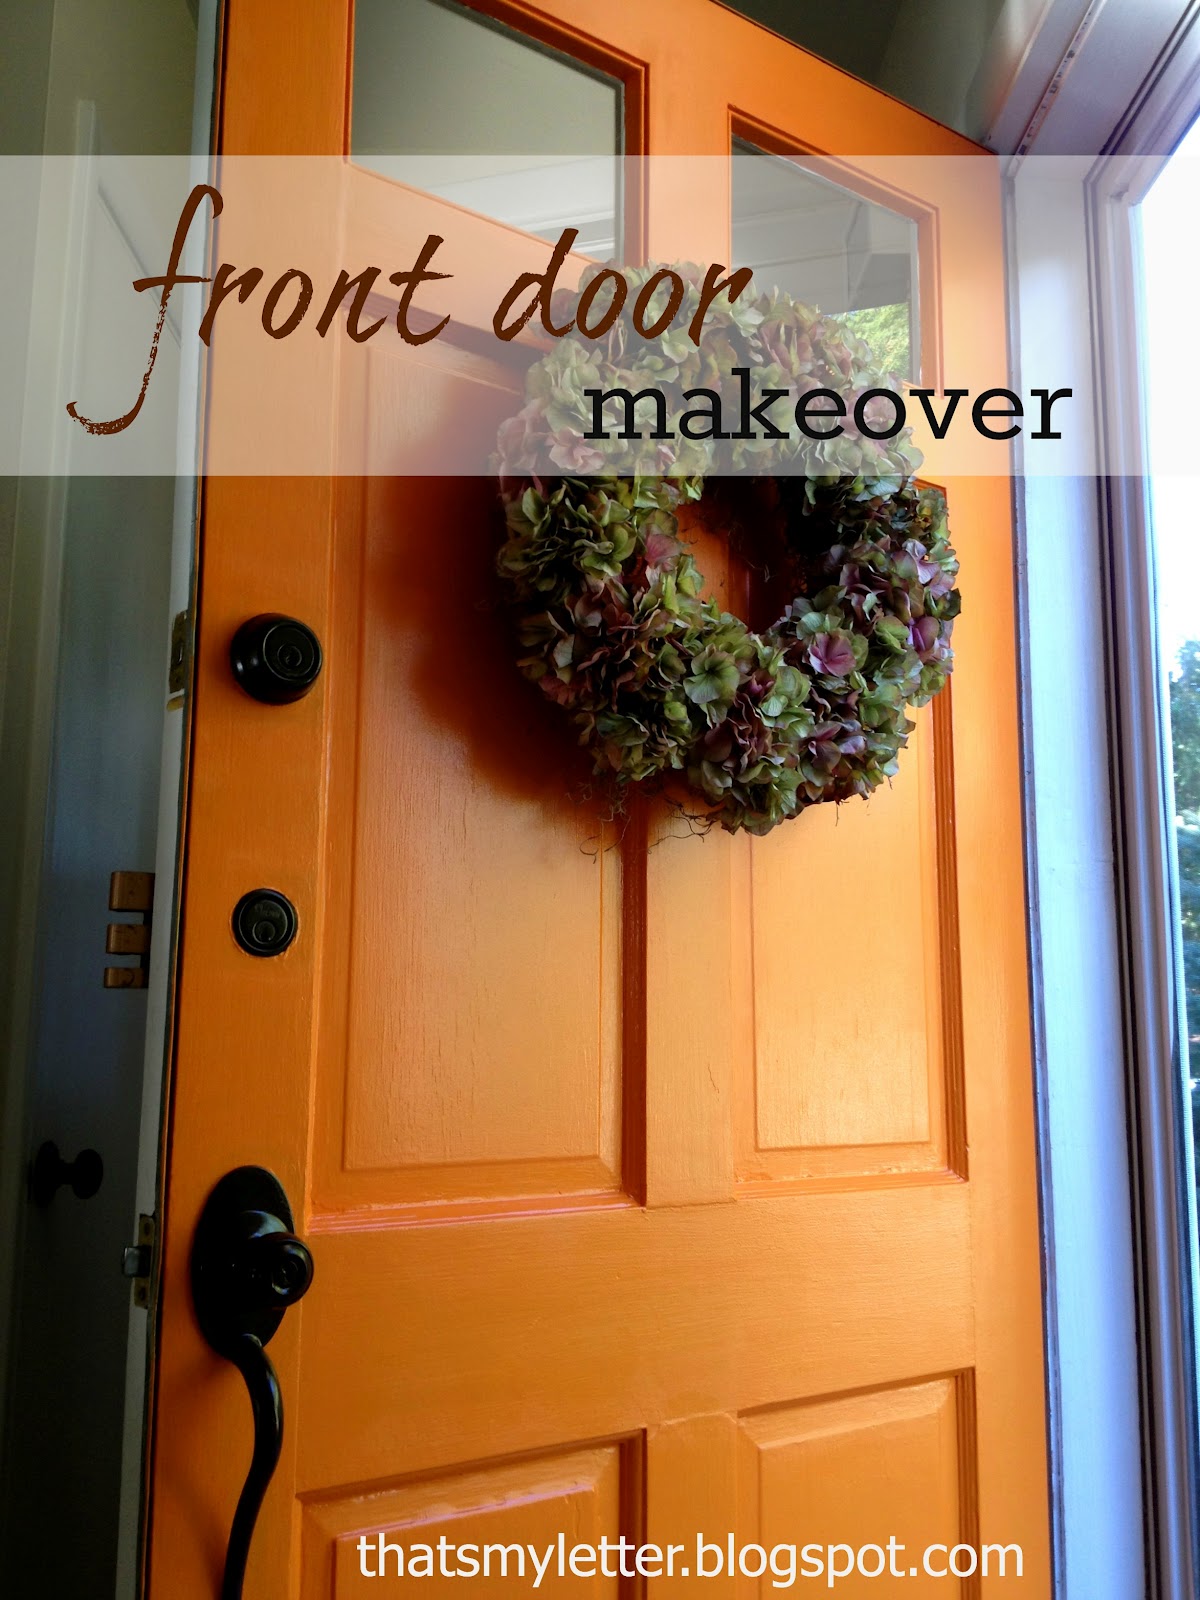 That's My Letter: Front Door Makeover